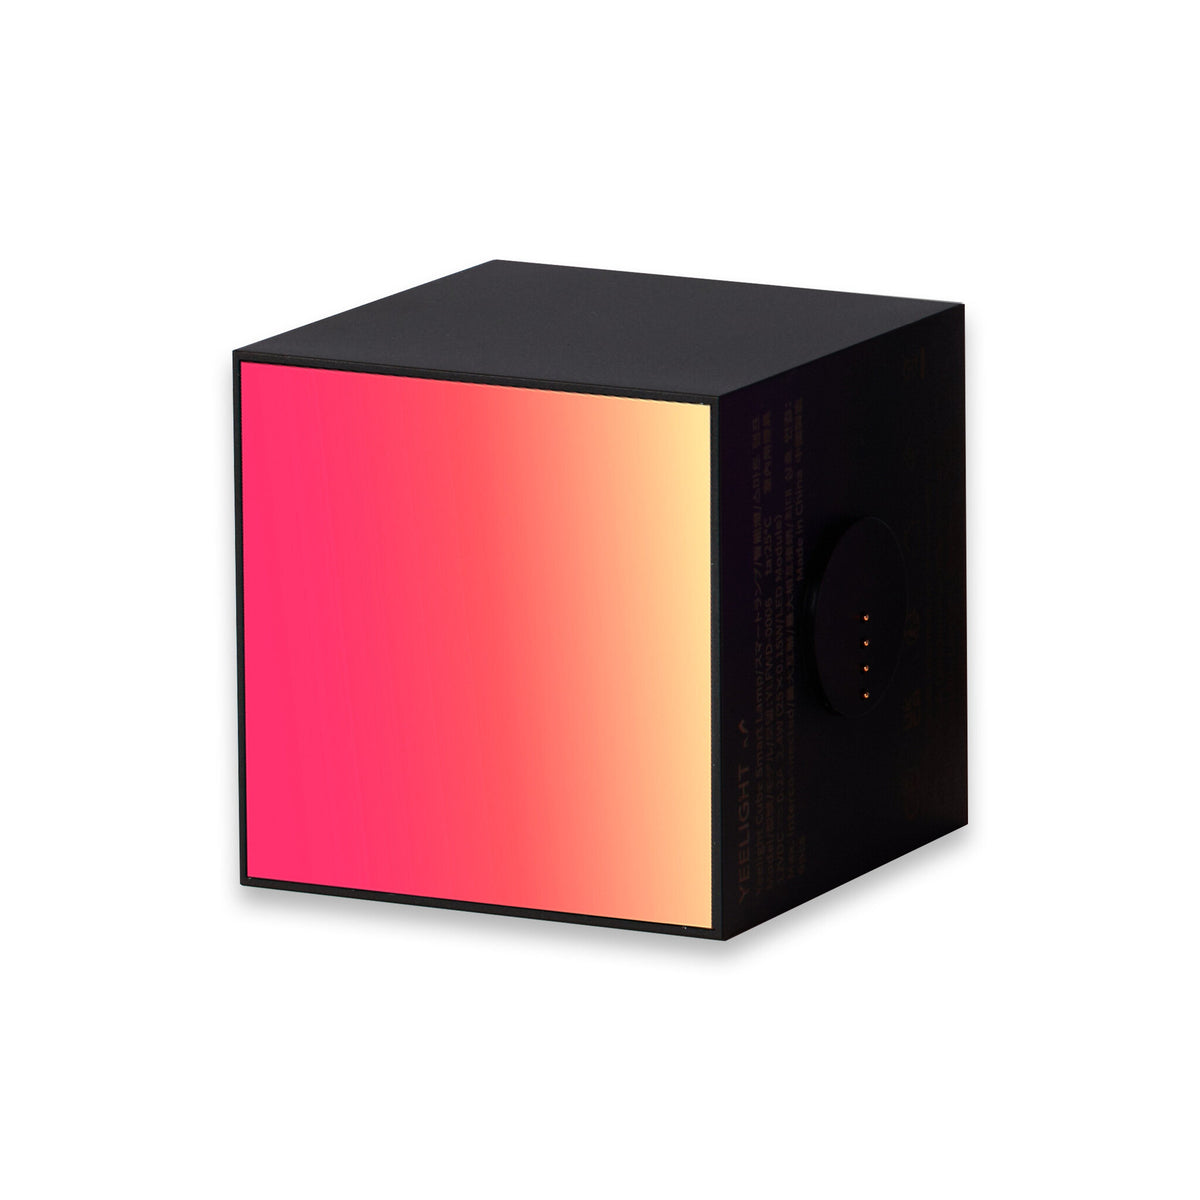 Yeelight Cube (Panel Extension) - Wi-Fi Smart table lamp in Black